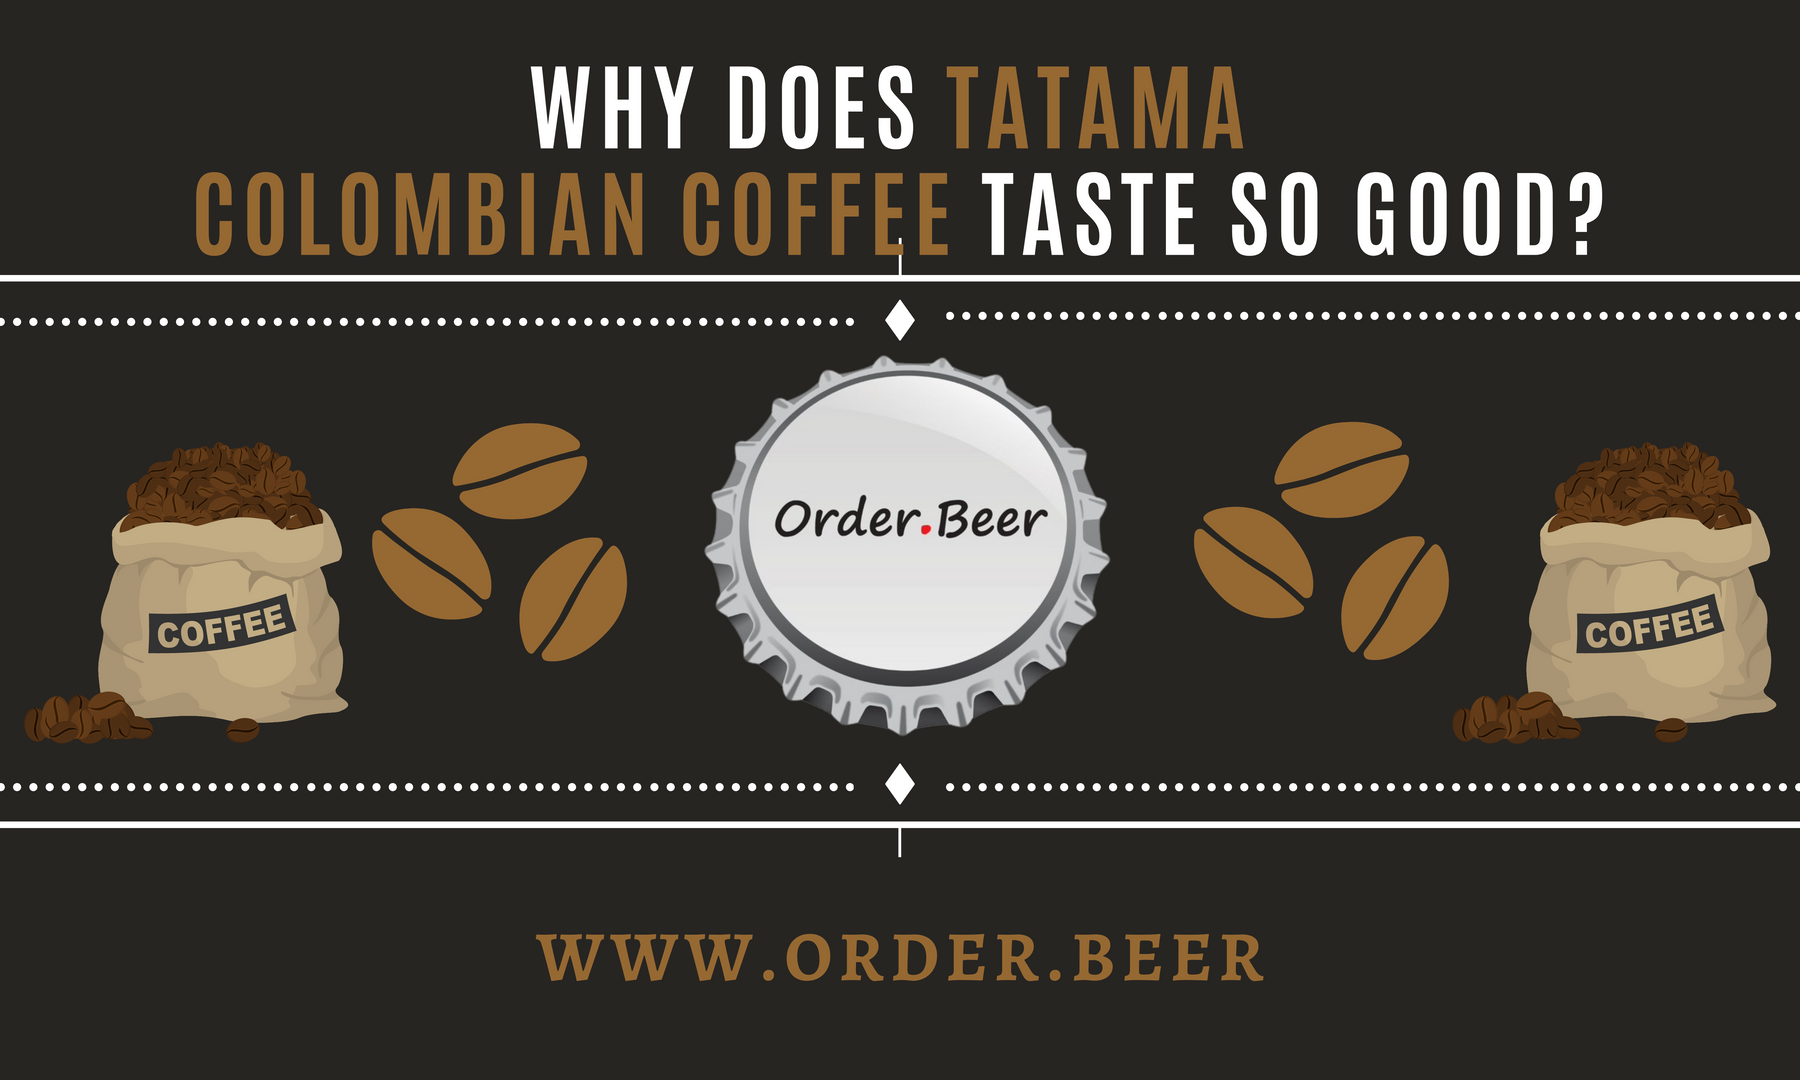 Why does Tatama Colombian coffee taste so good?